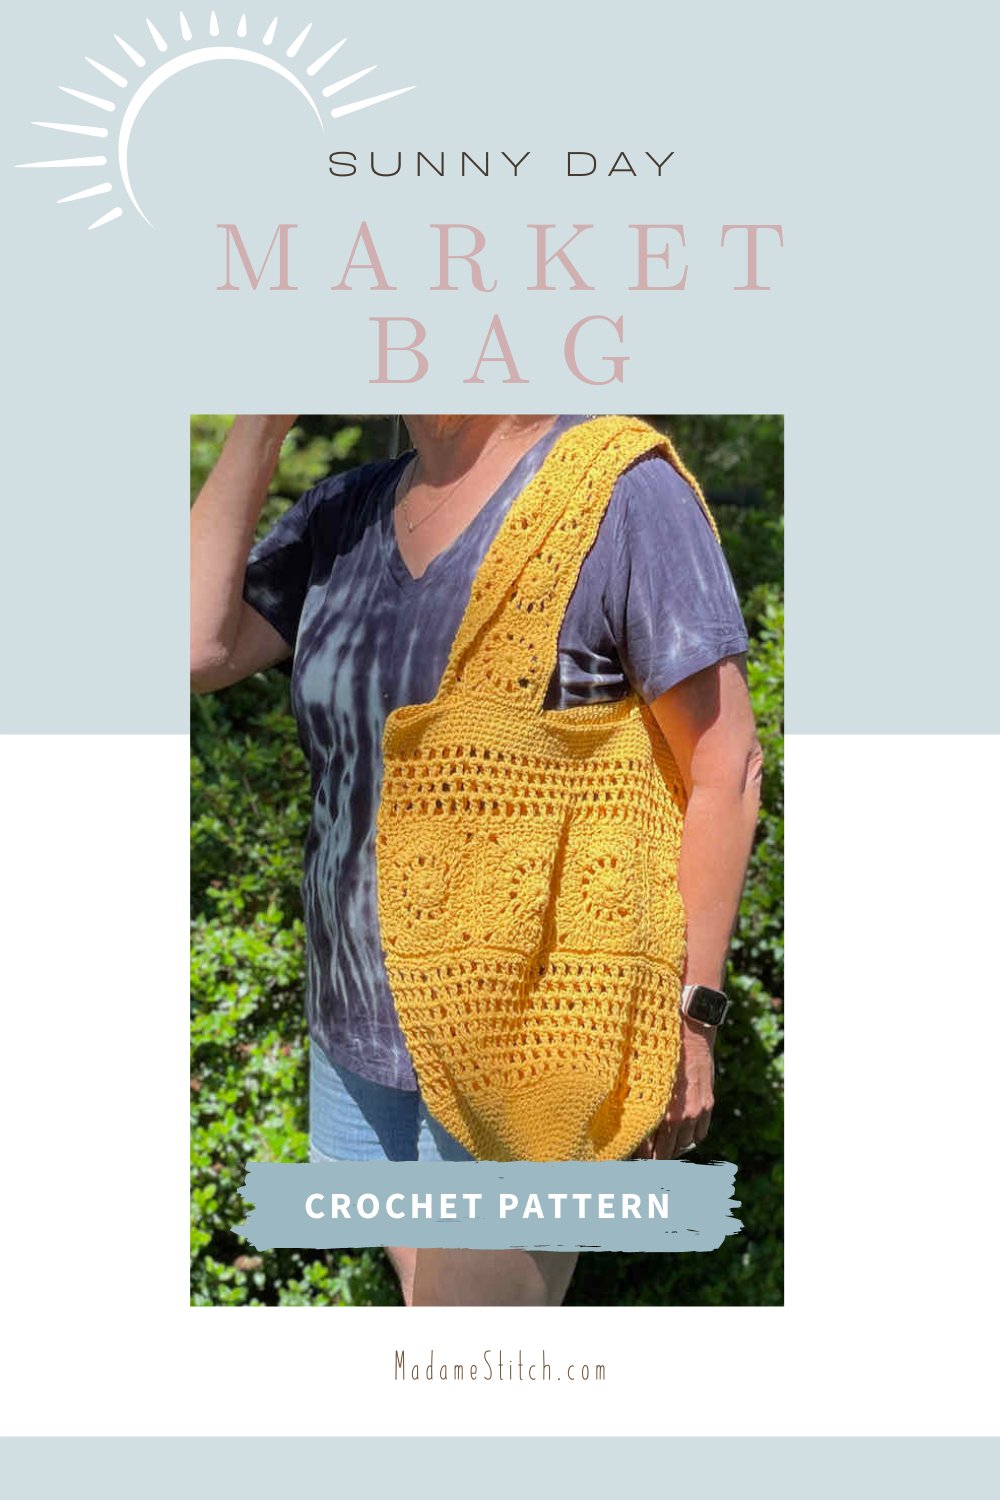 The Sunny Day Market Bag crochet pattern by MadameStitch